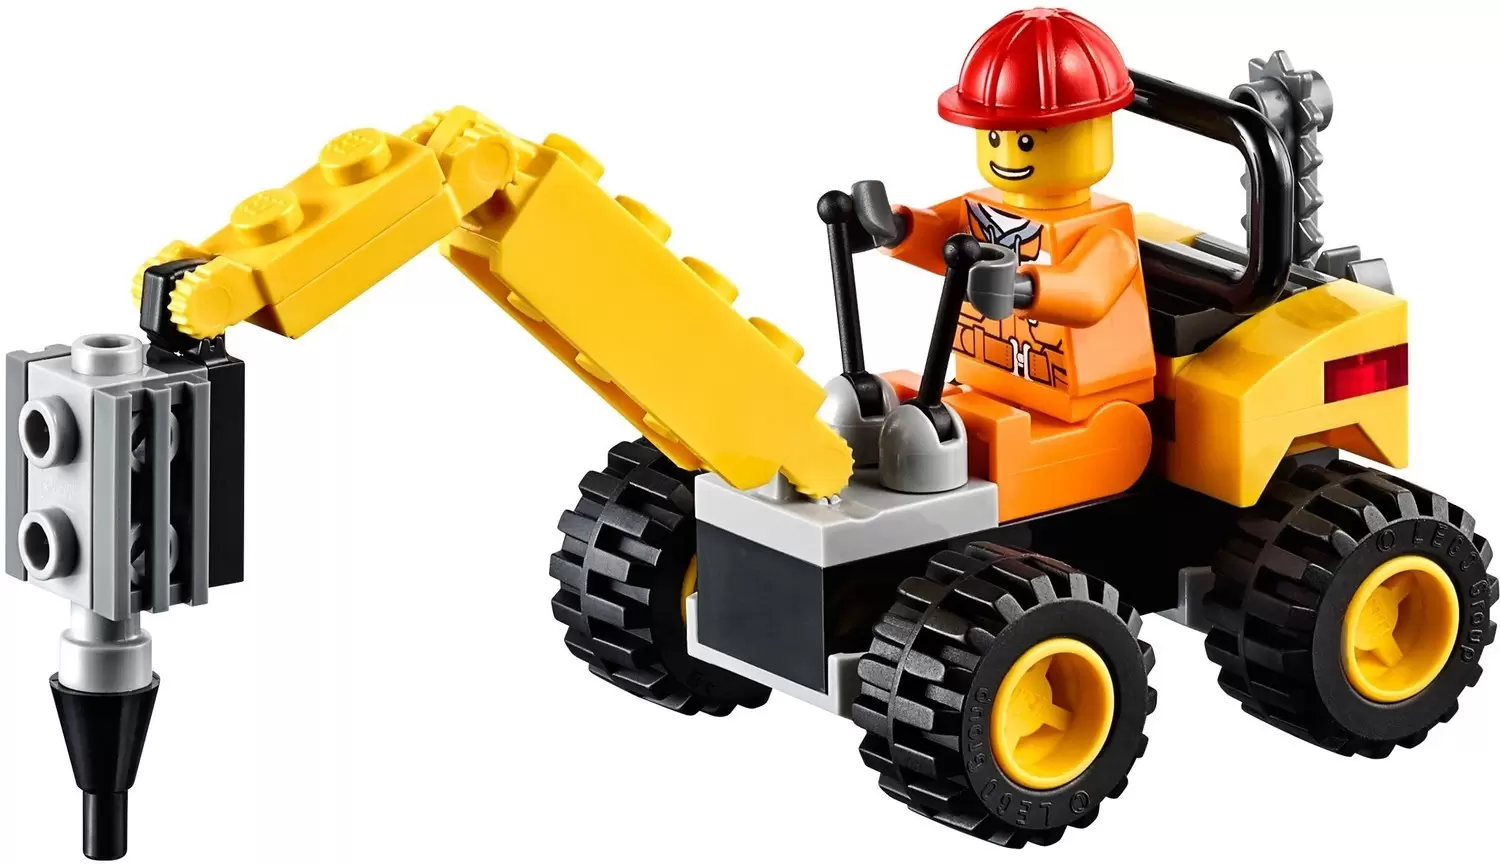 LEGO CITY - Demolition Driller